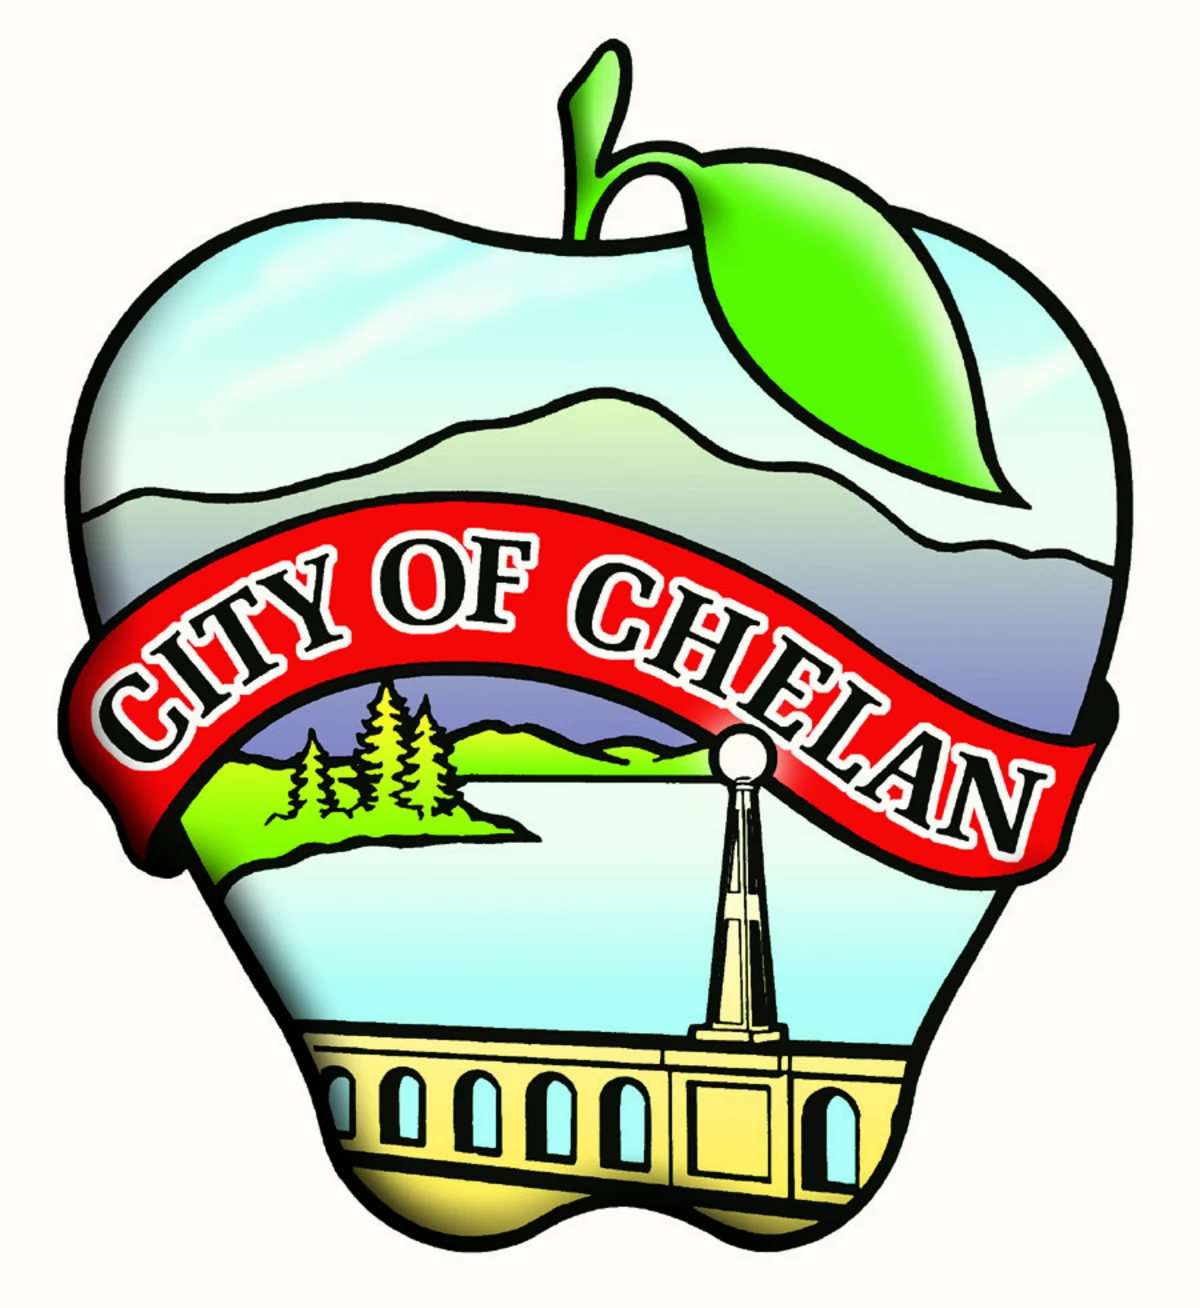 City of Chelan Seeks Public Input for Shoreline Master Plan